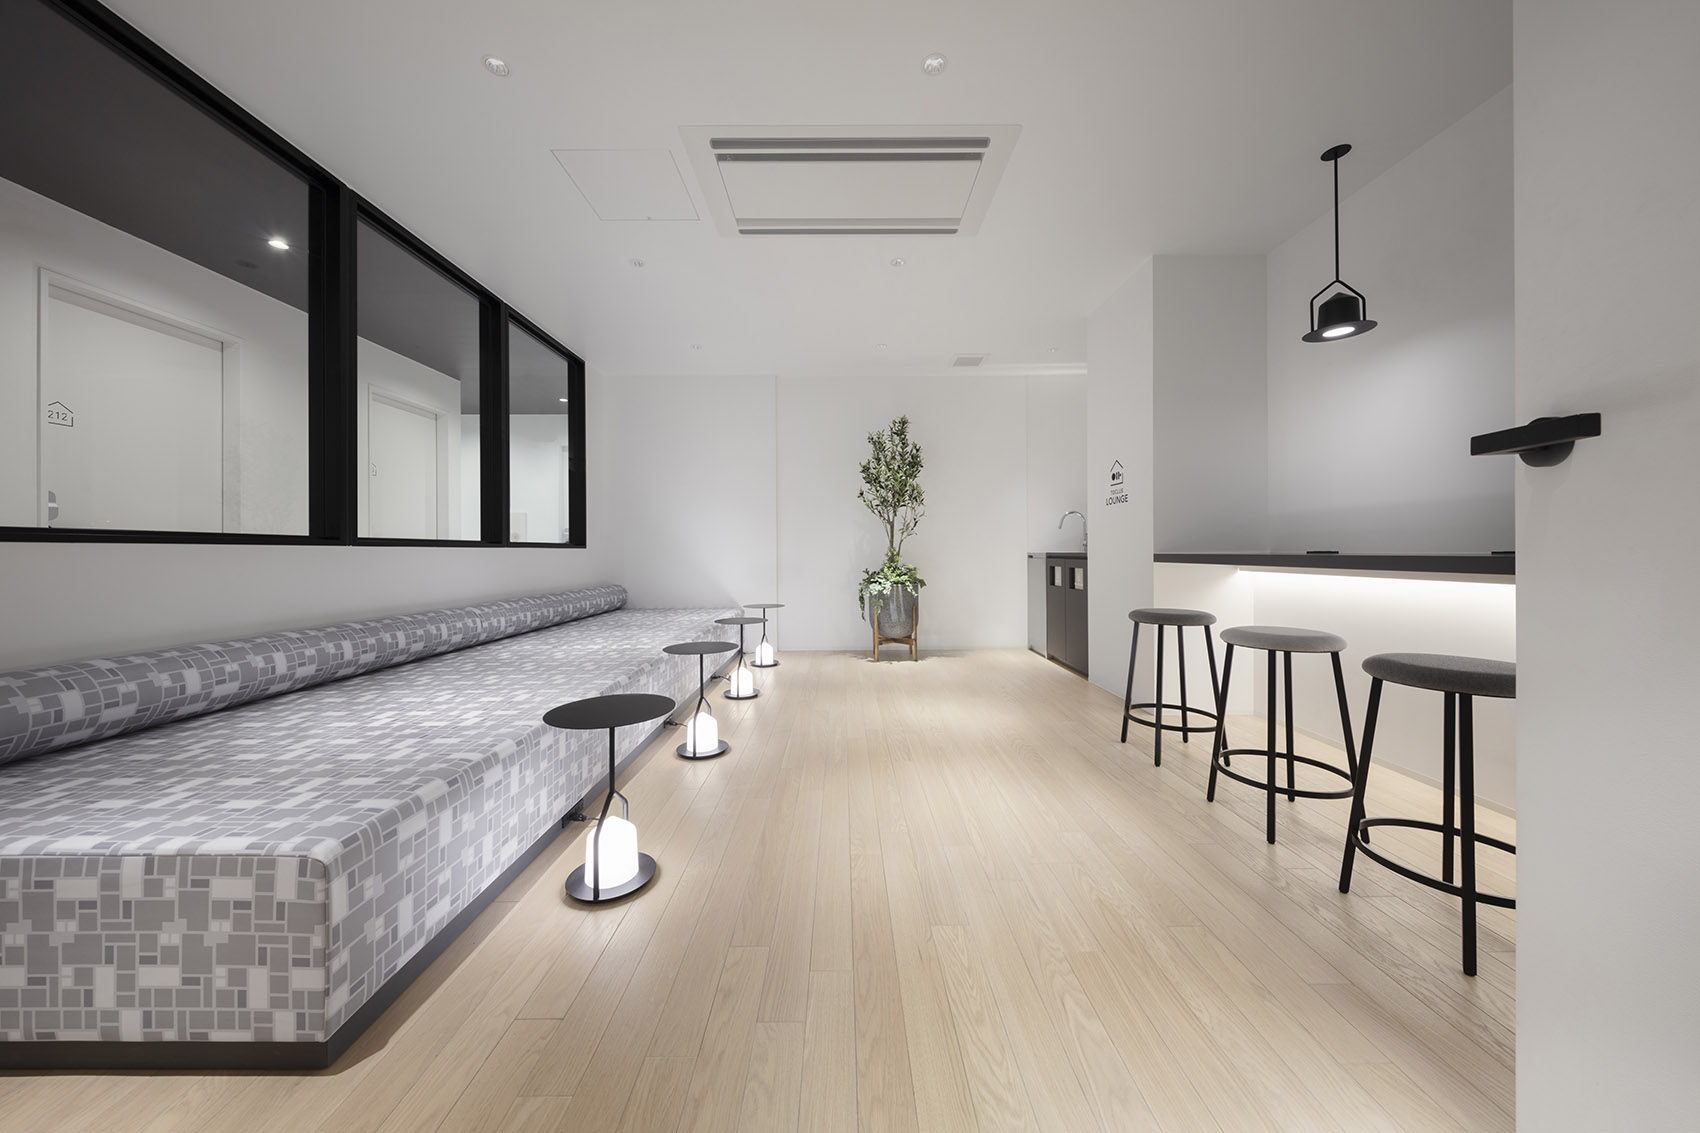 MARUI TOCLUS综合共享住宅，东京/将商业空间转化成展示新生活方式和社区文化的场所-113